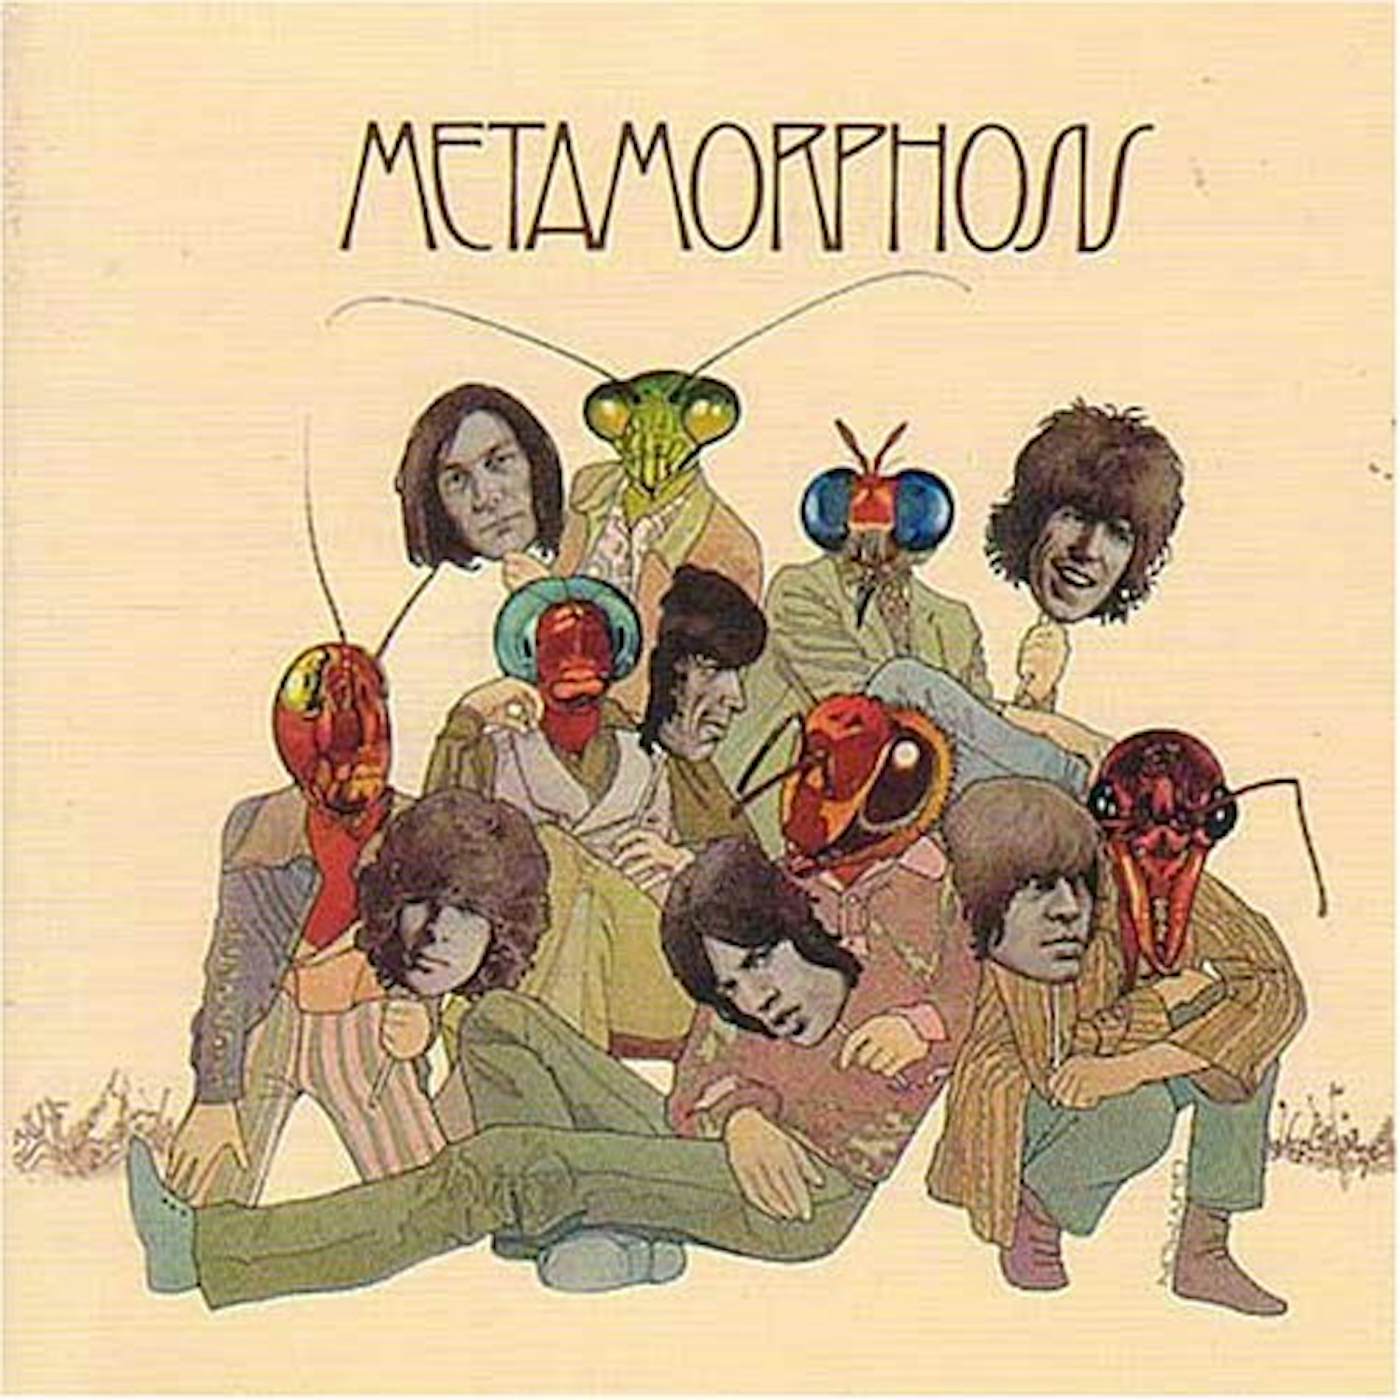 The Rolling Stones Metamorphosis Vinyl Record